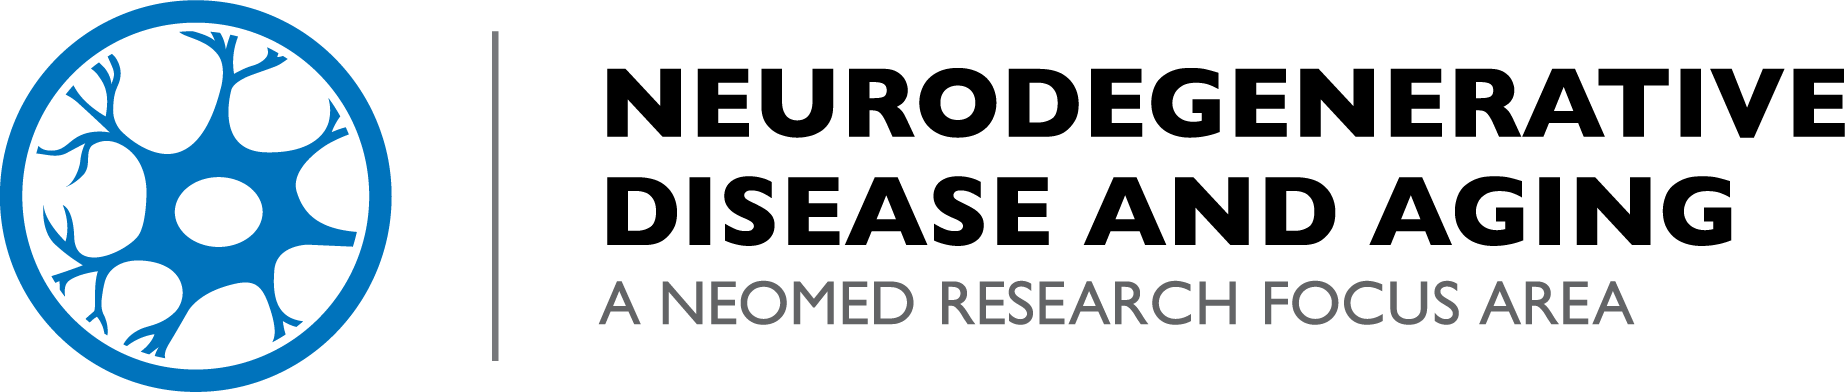 Neurodegenerative Disease and Aging Research Focus Area logo